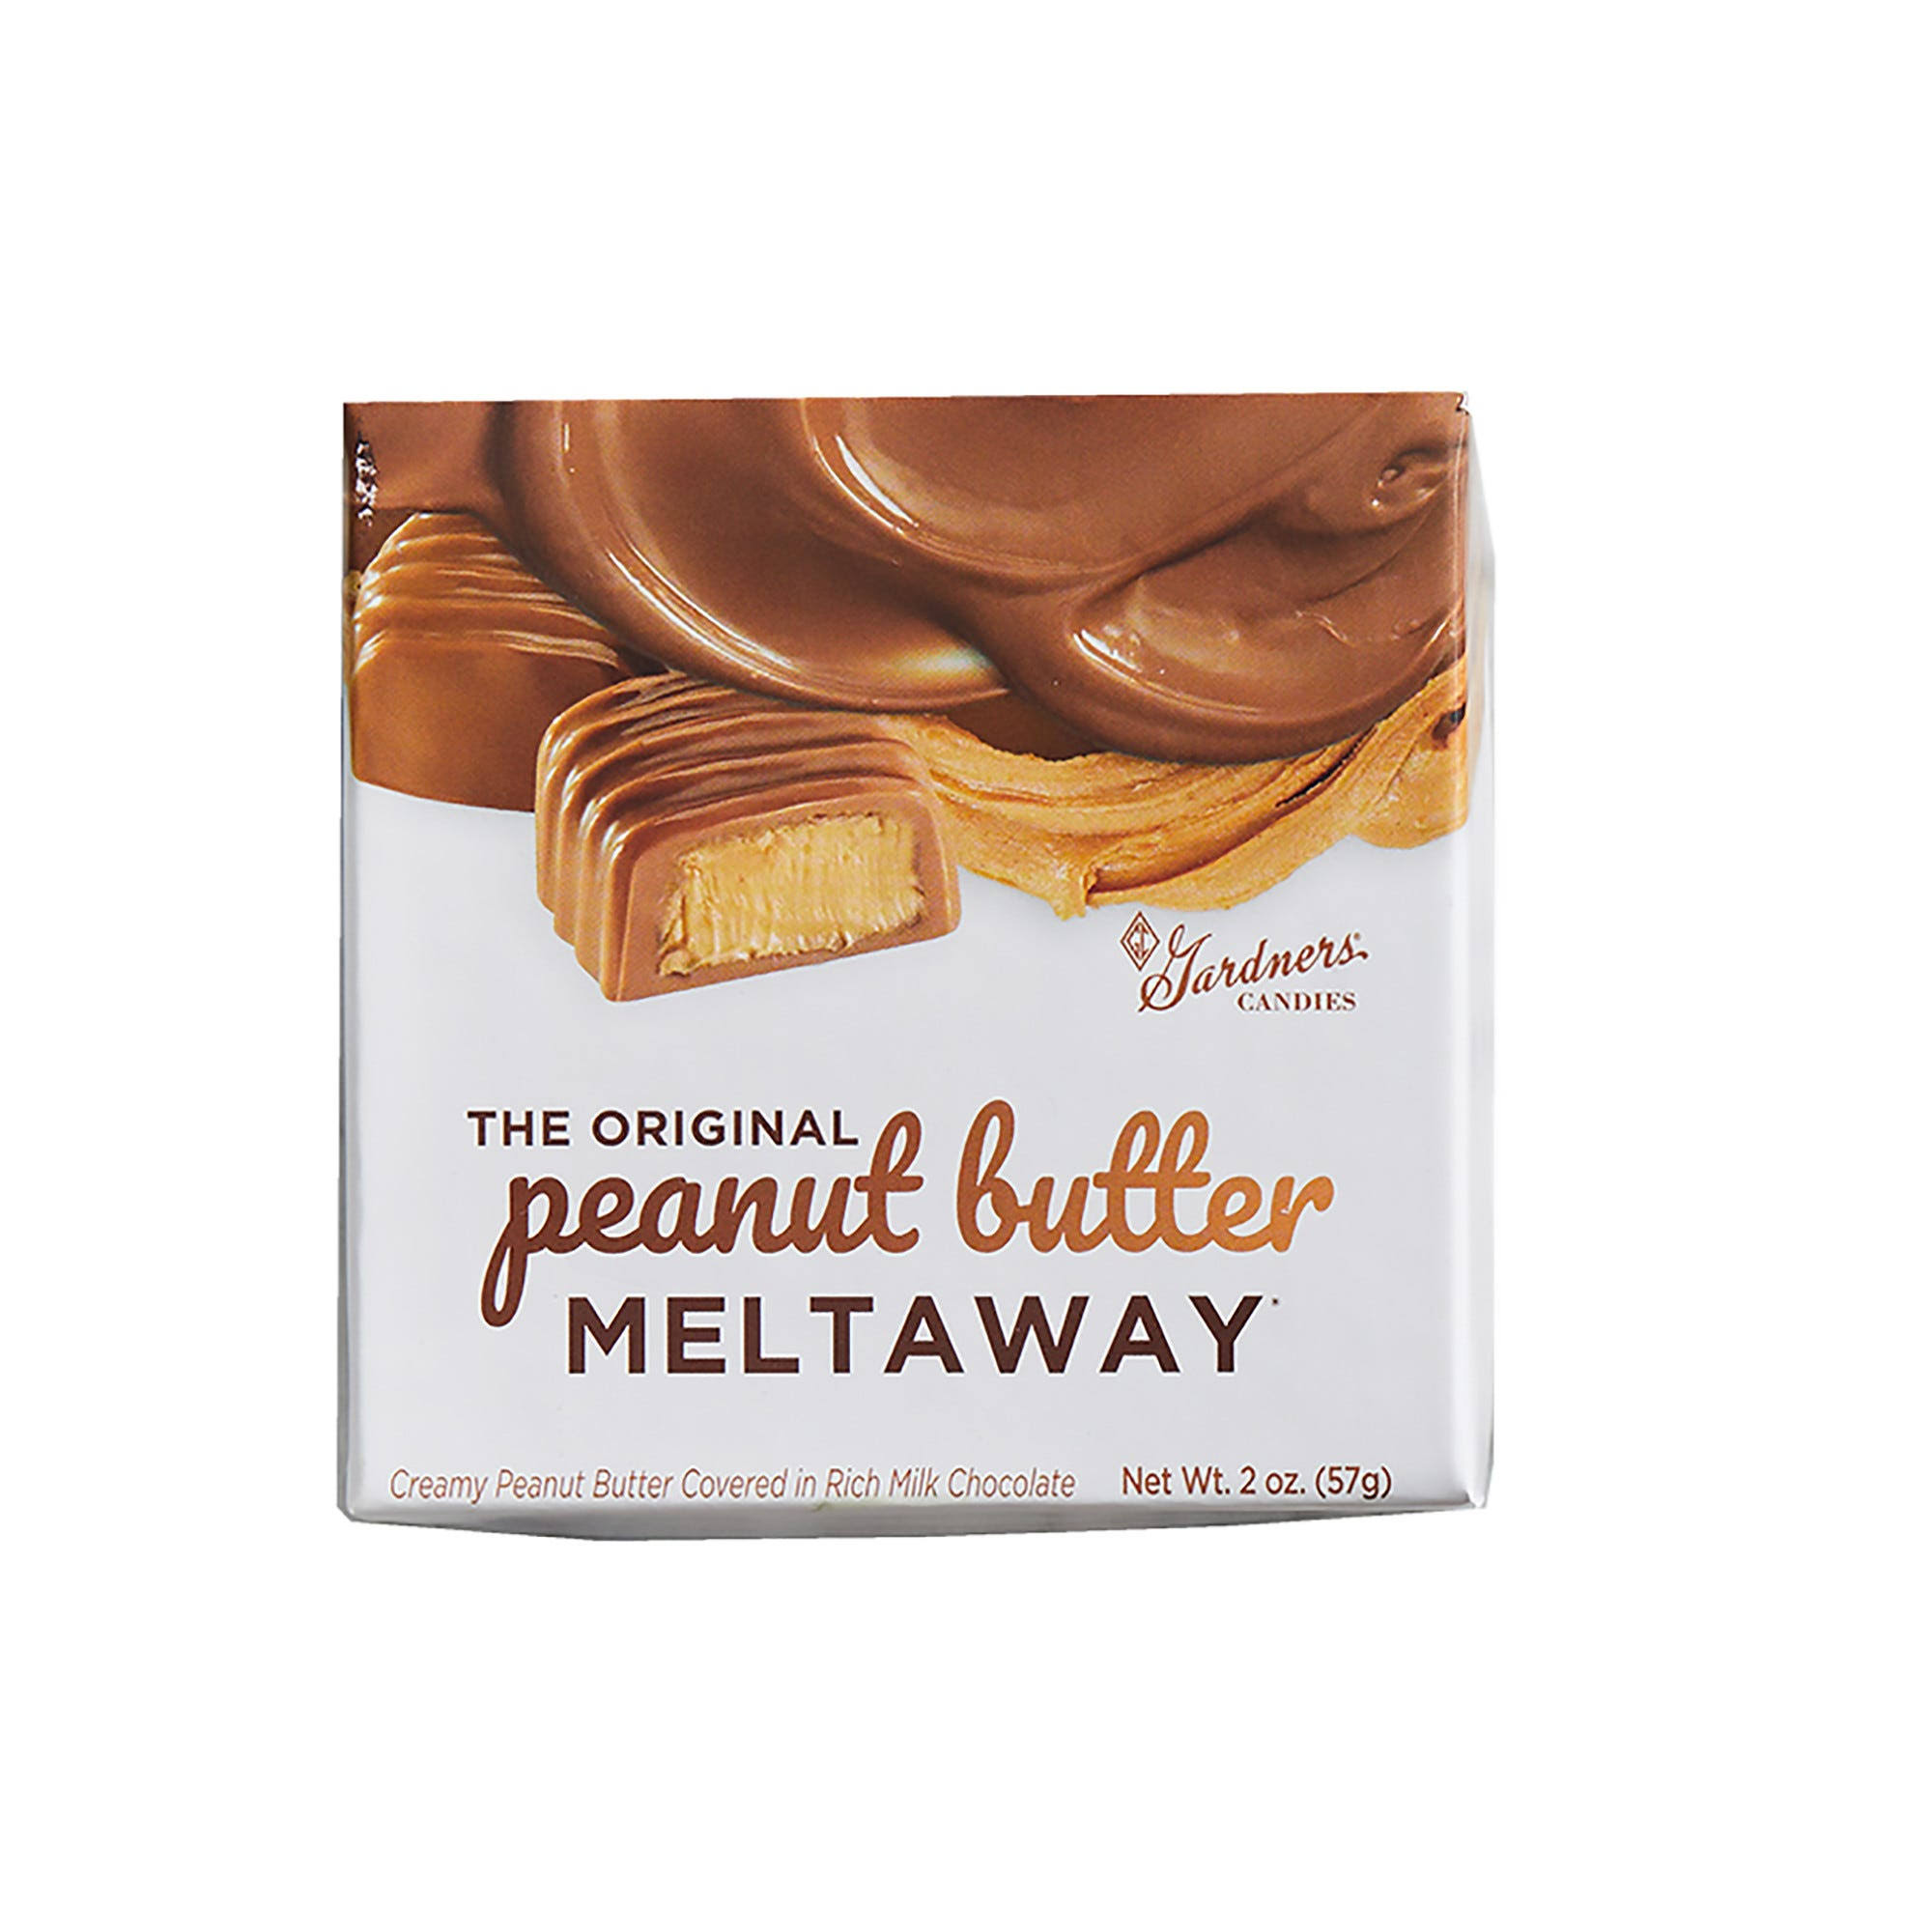 Gardners Peanut Butter Meltaway - 2 oz